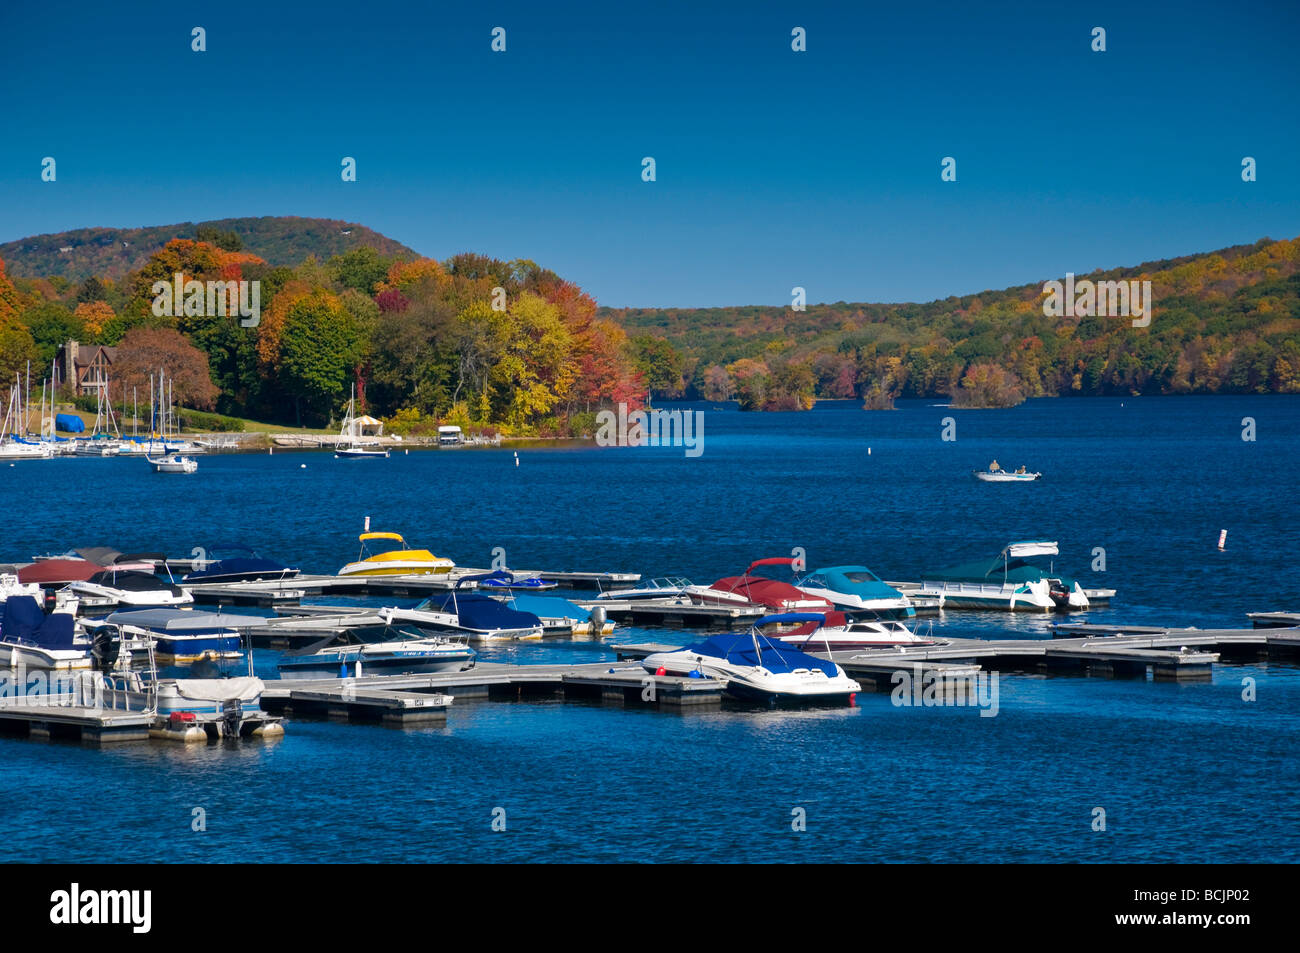 USA, Connecticut, Lake Candlewood Stock Photo